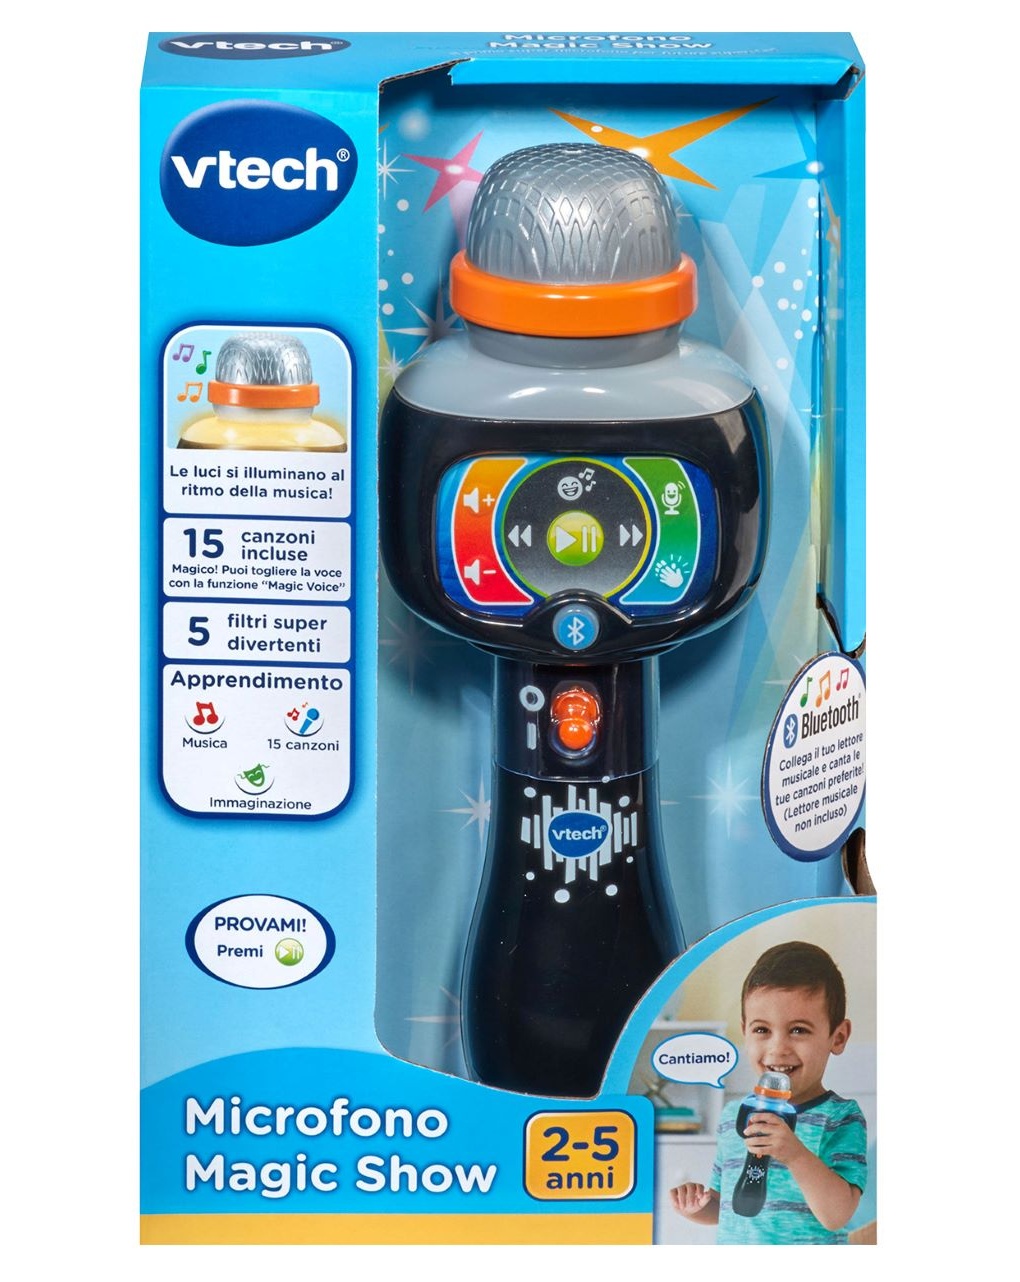 Microfono magic show 2/5 anni - vtech - VTECH